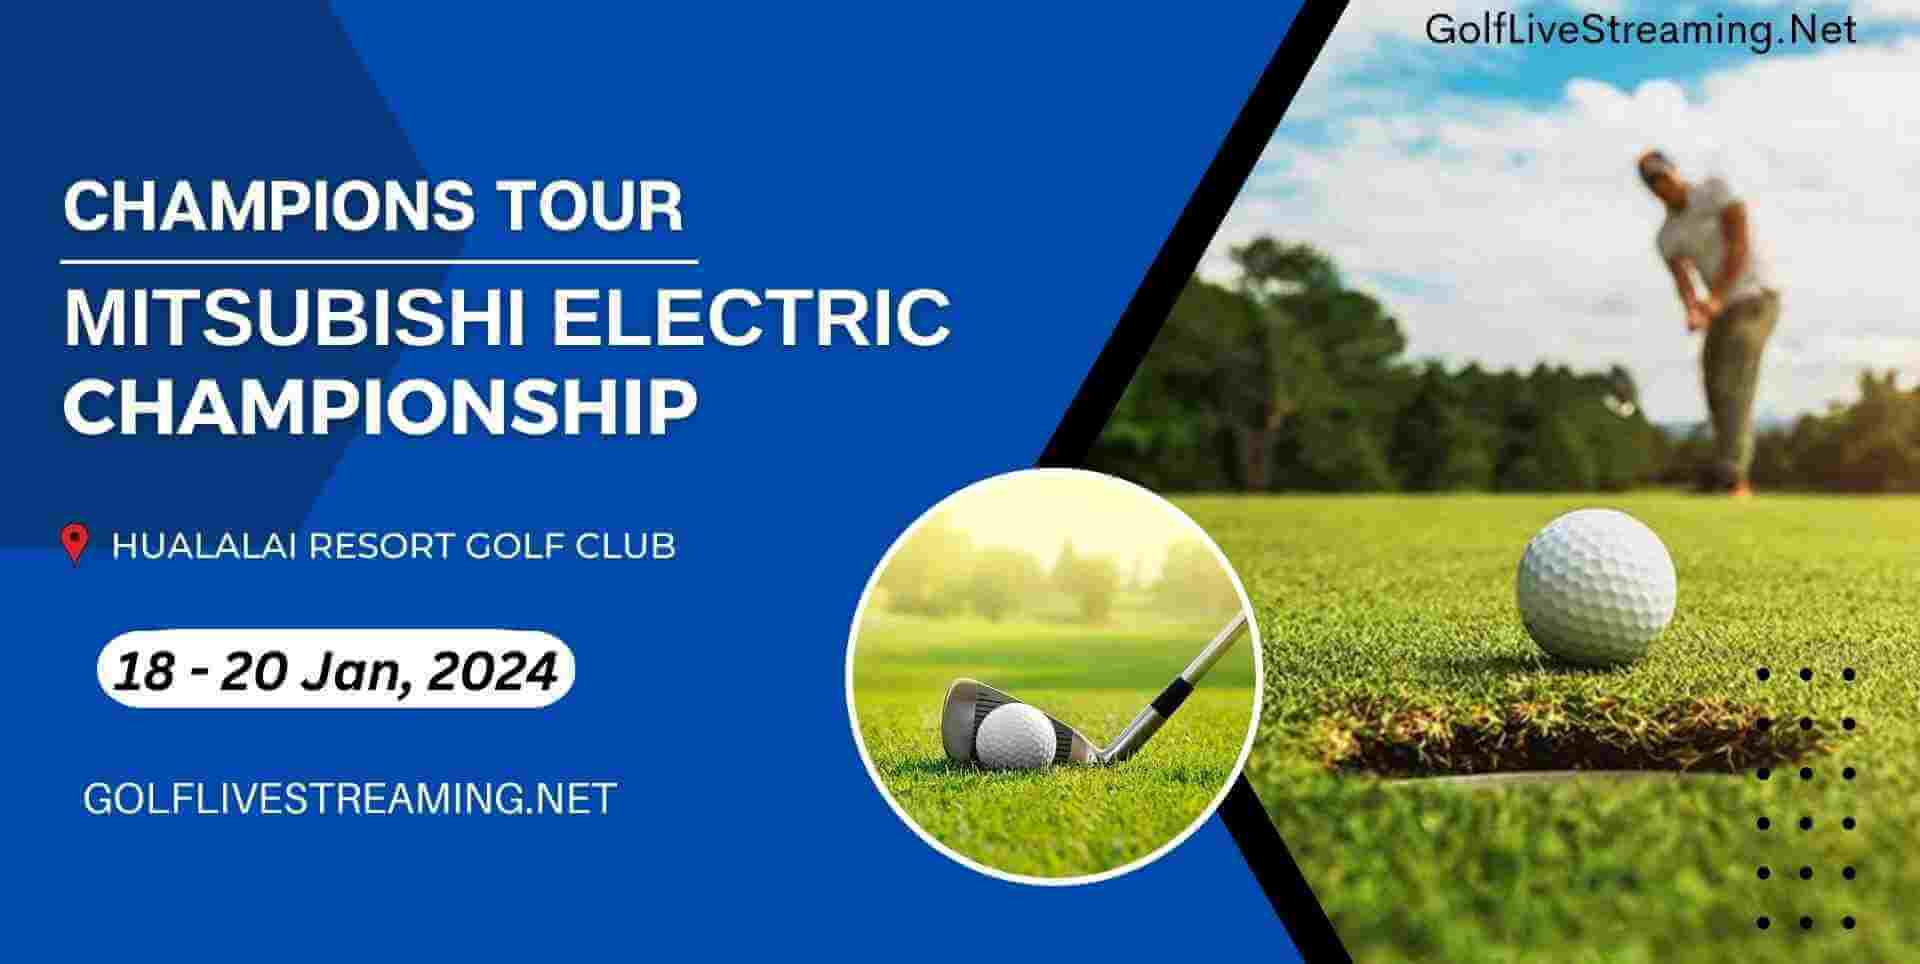 Mitsubishi Electric Golf Championship 2019